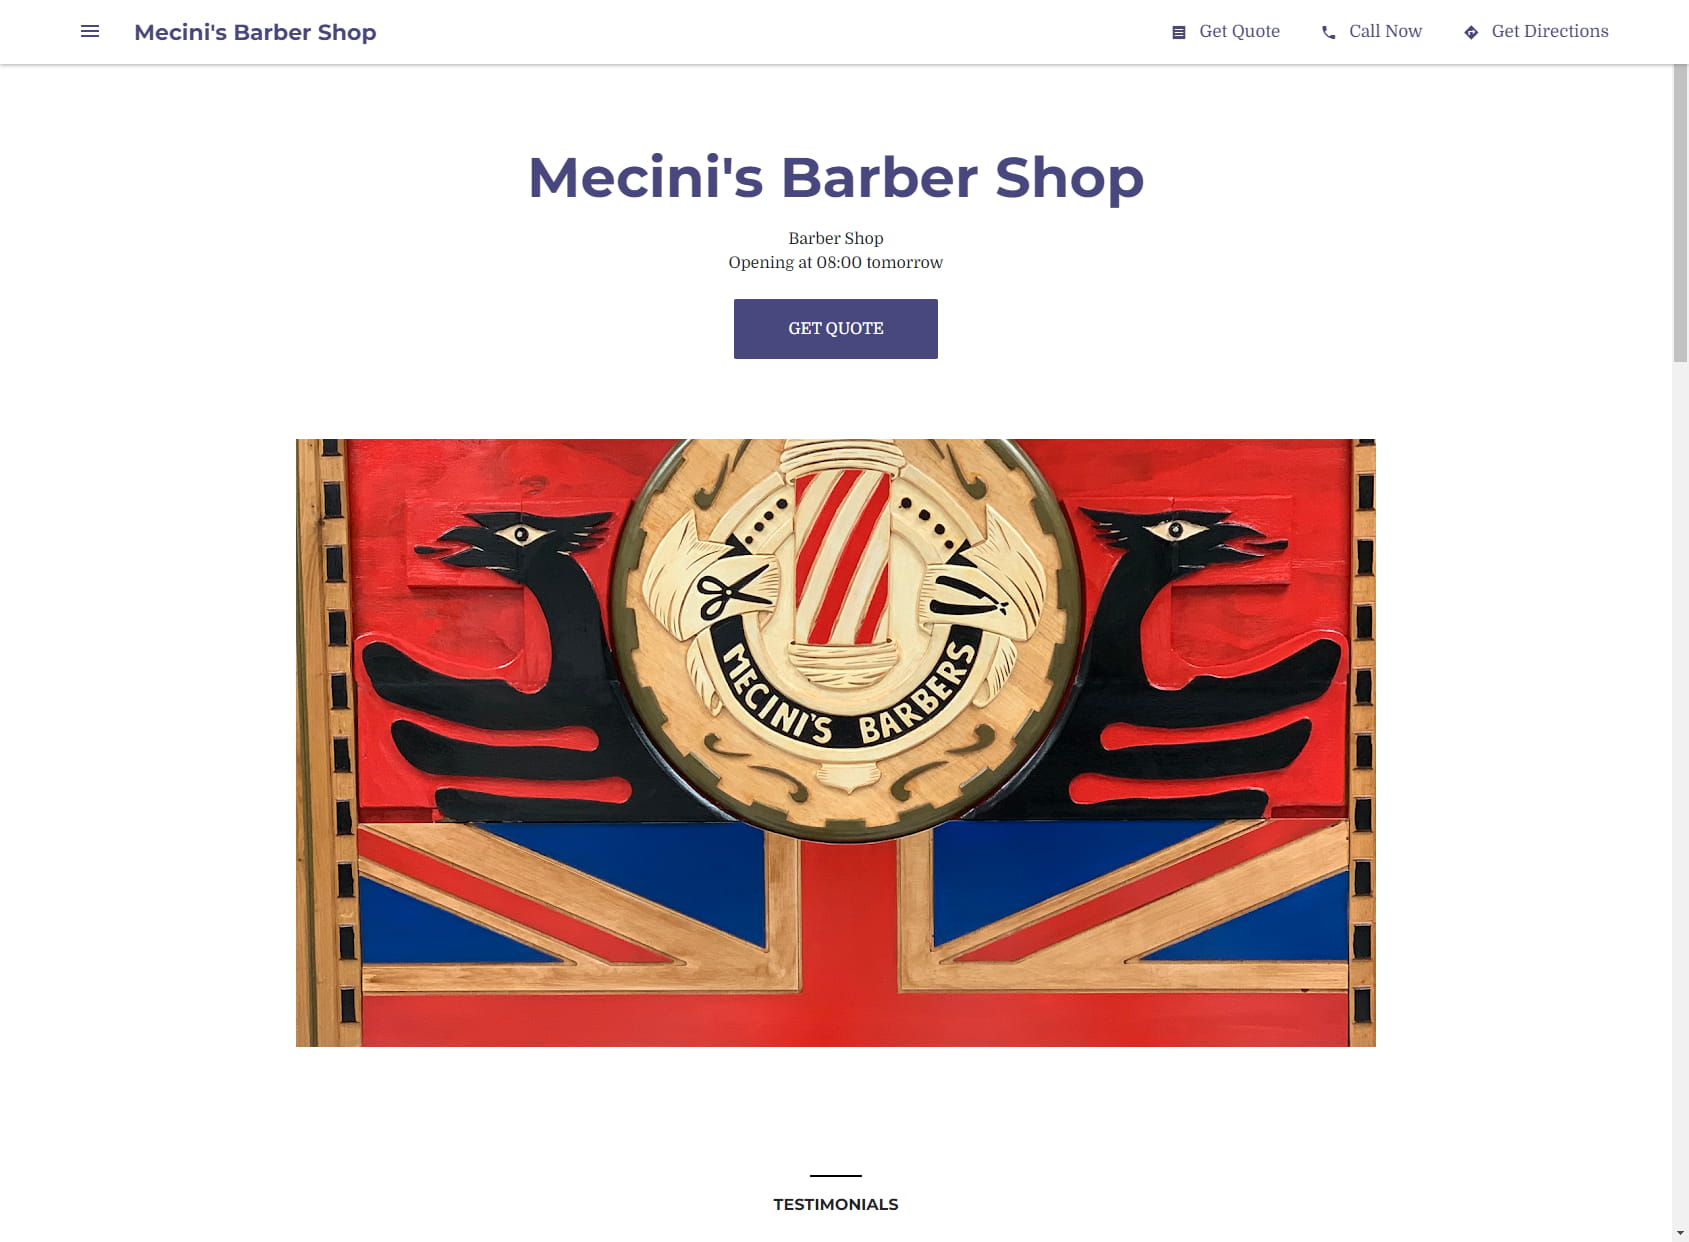 Mecini's Barber Shop